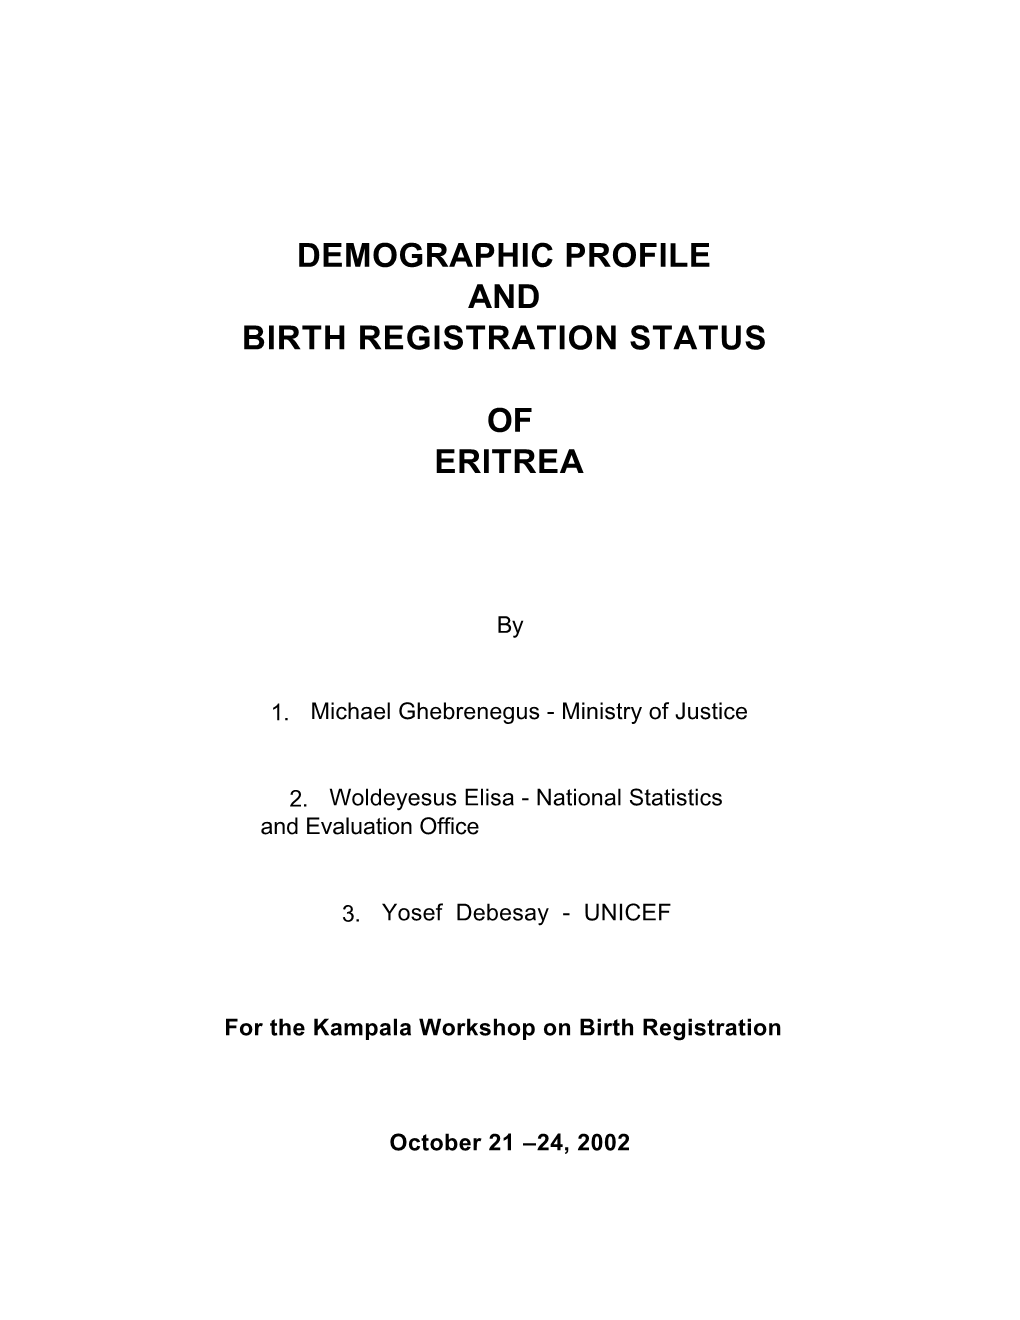 Demographic Profile and Birth Registration Status of Eritrea P